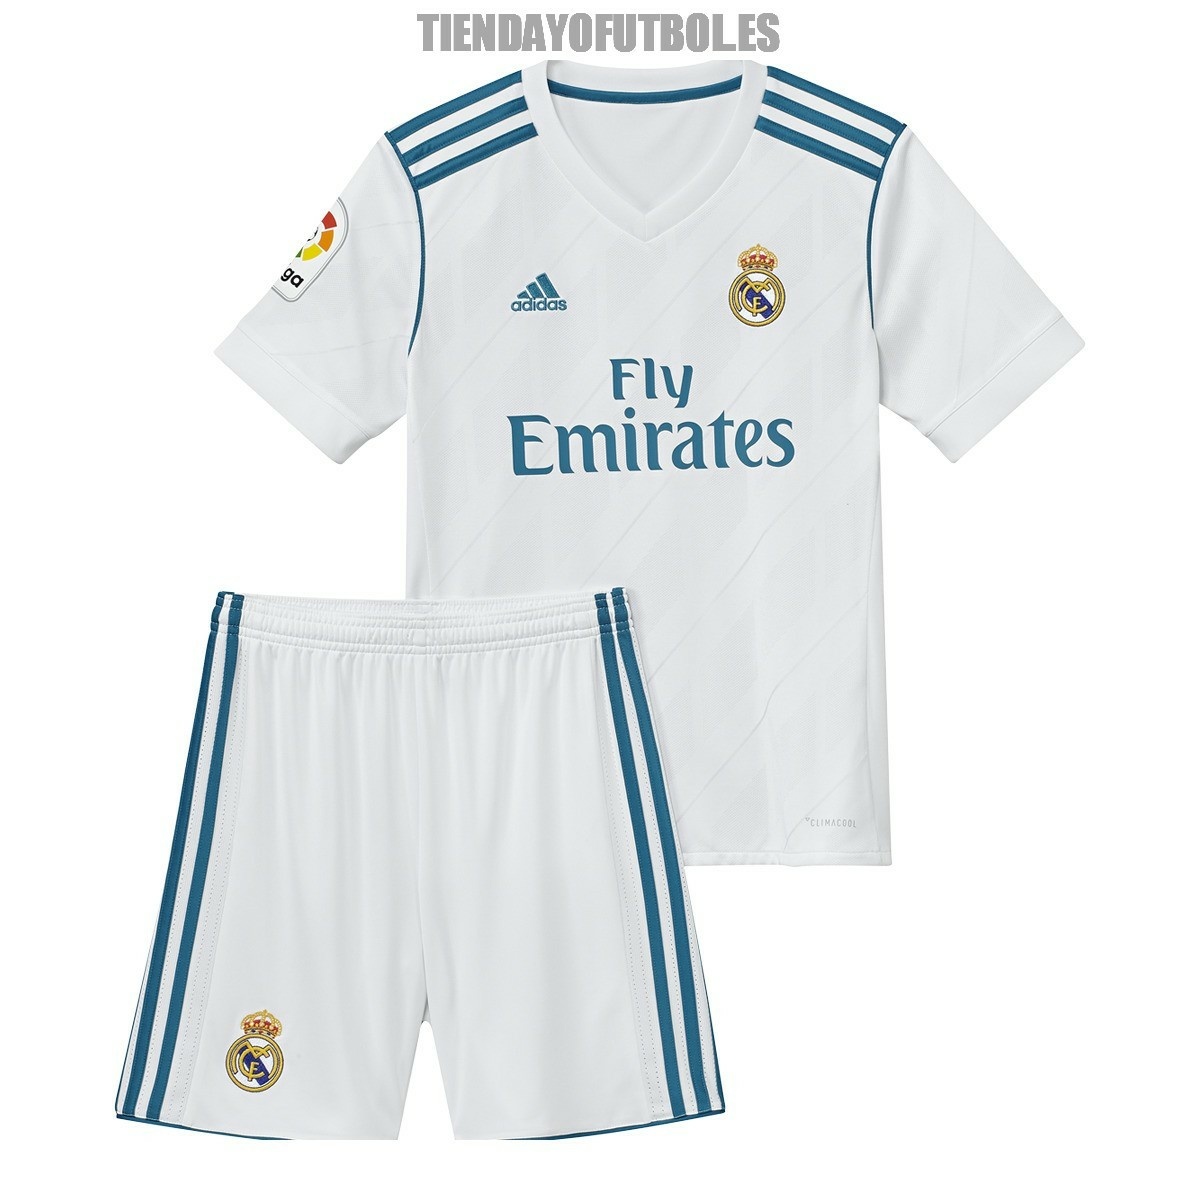 Kit 1ª 2017/18 Real Madrid CF - Tienda Yo Futbol